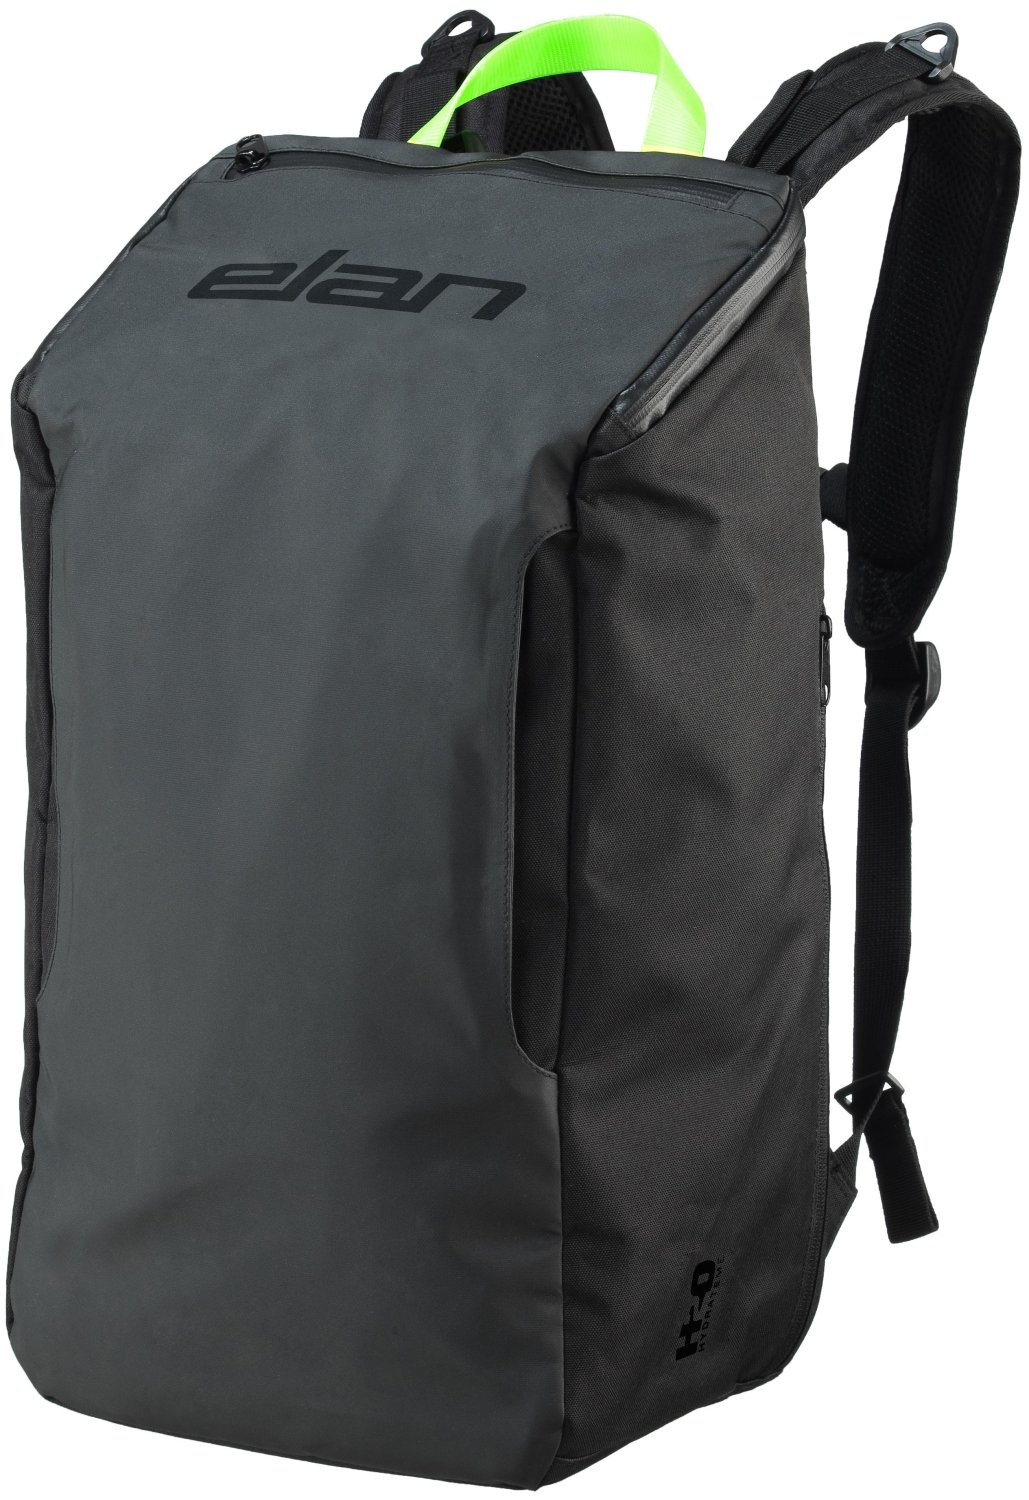 Рюкзак велосипедный ELAN AGT BACKPACK RACE, 25 л, 2020-21, CG592419 peg perego рюкзак backpack